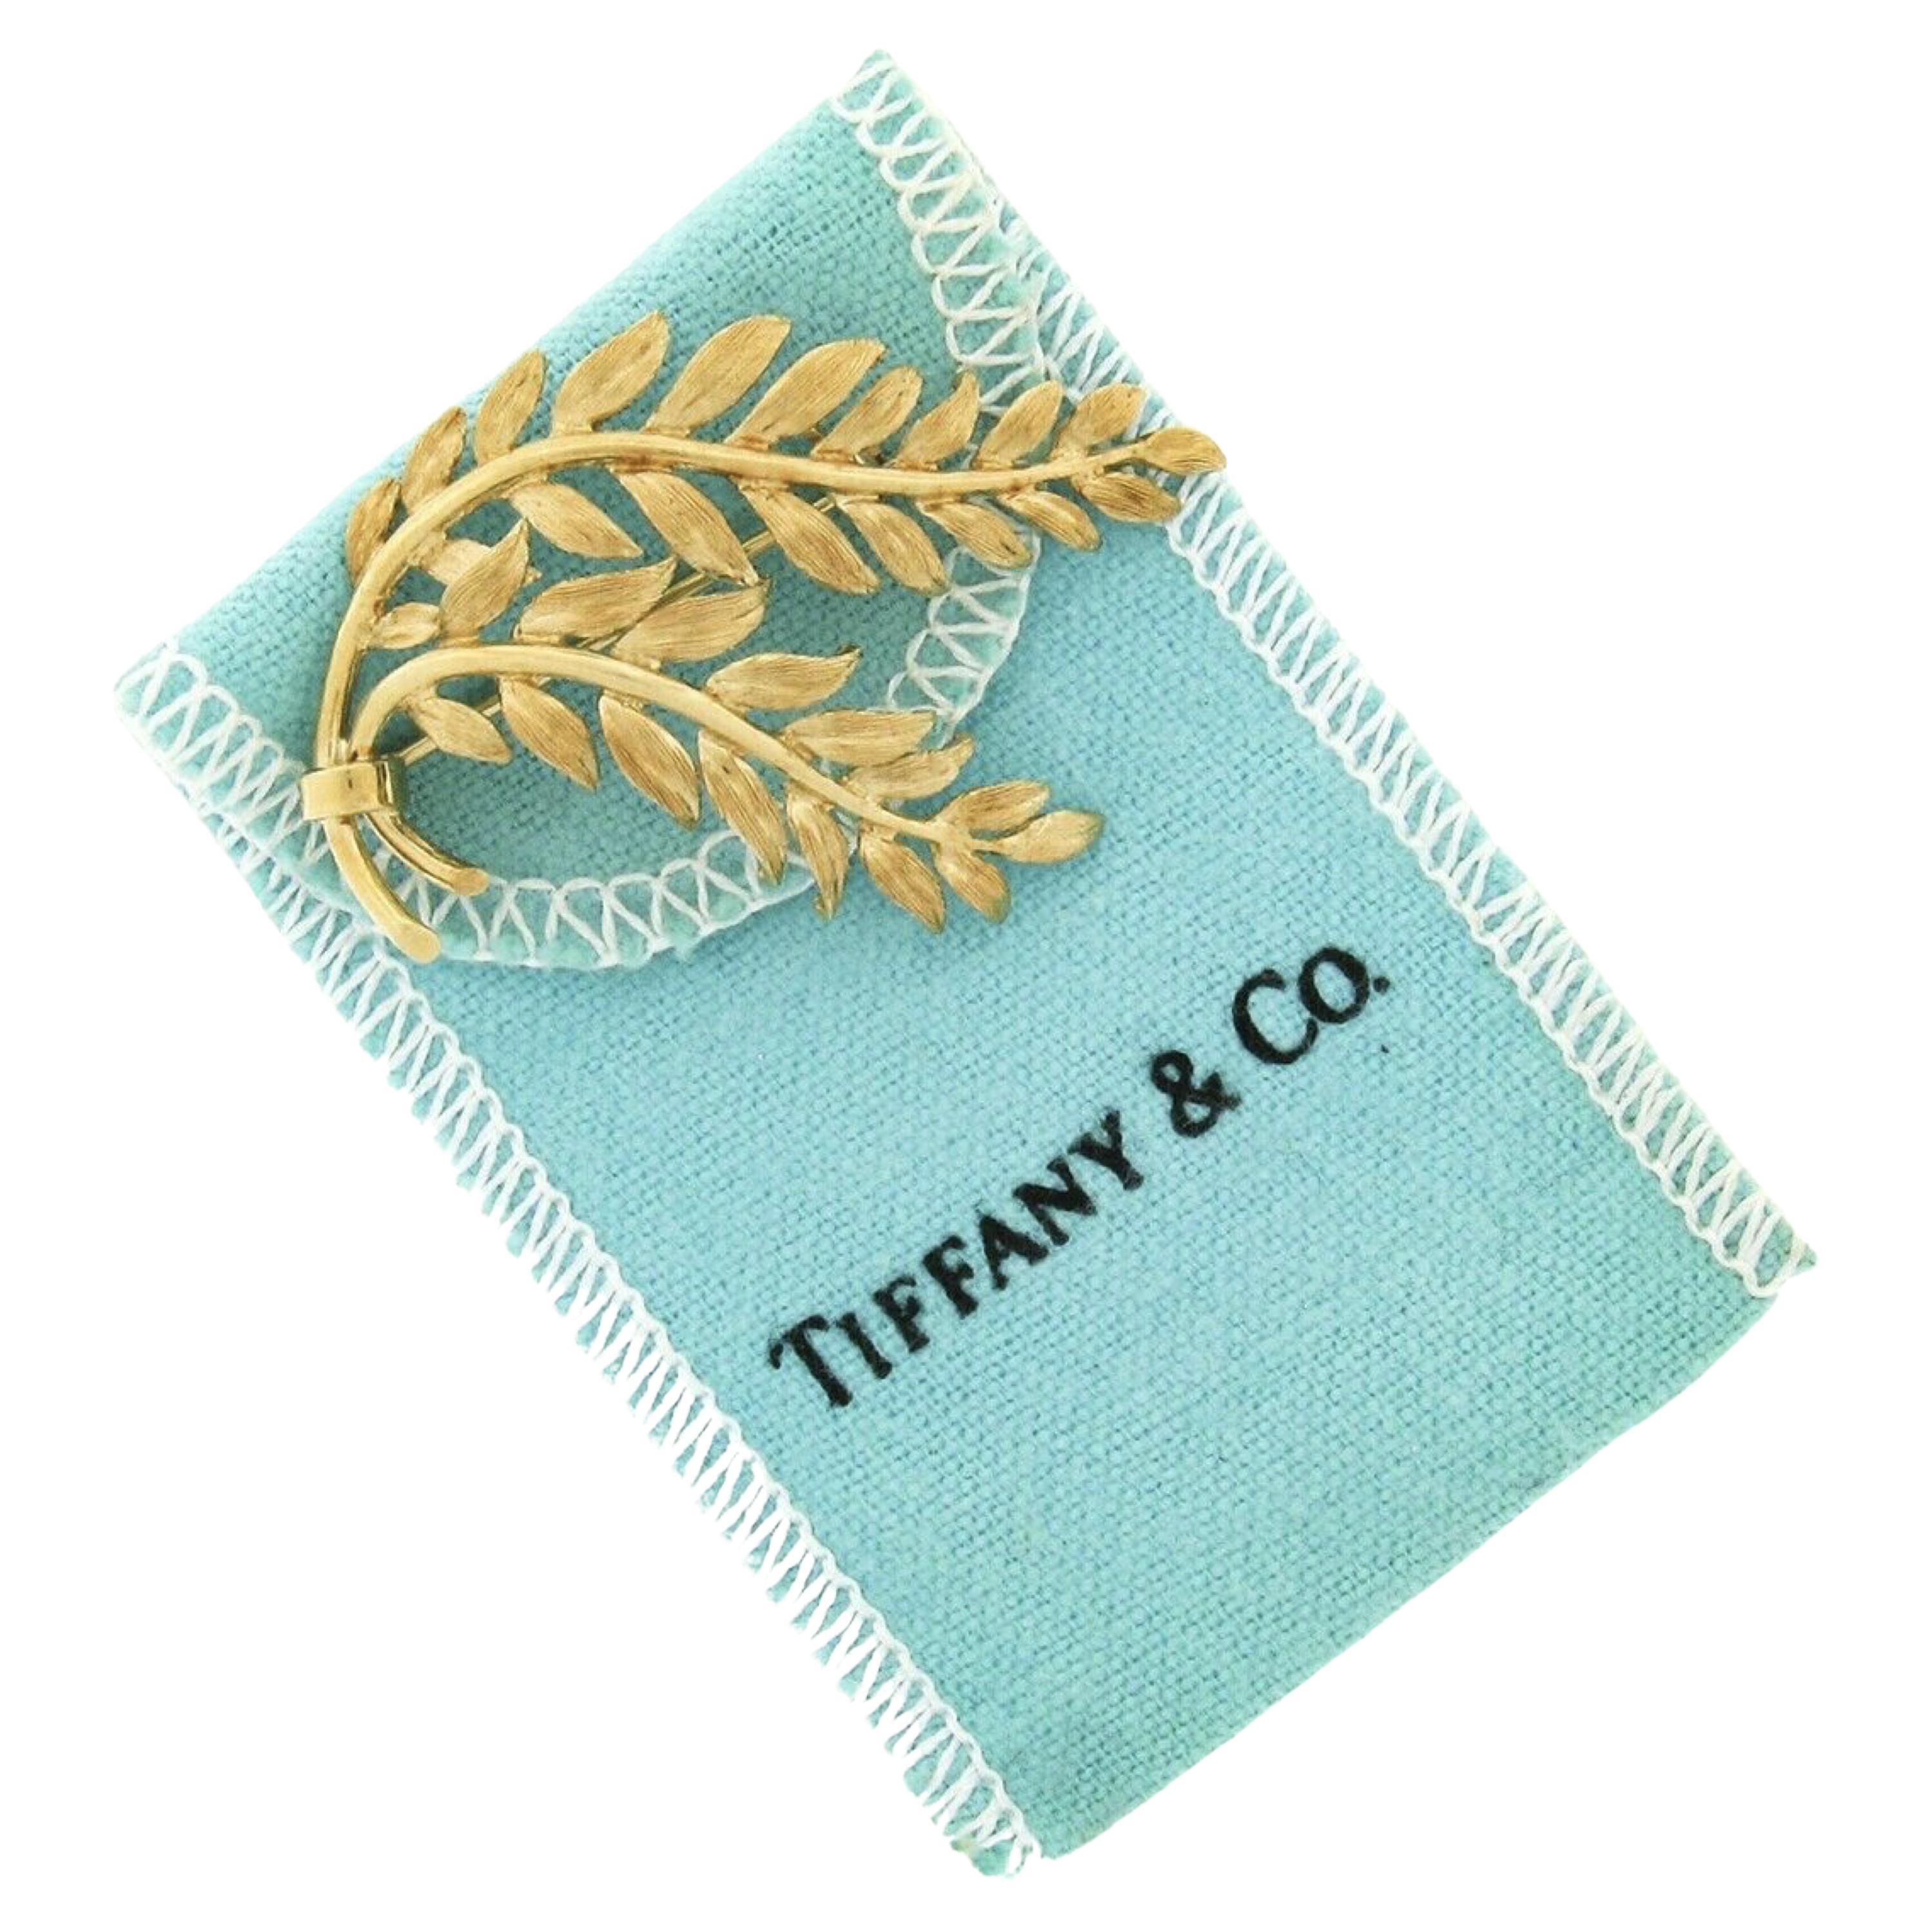 Vintage Tiffany & Co 18K Gold Detailed Textured Dual Fern Leaf Bundle Brooch Pin